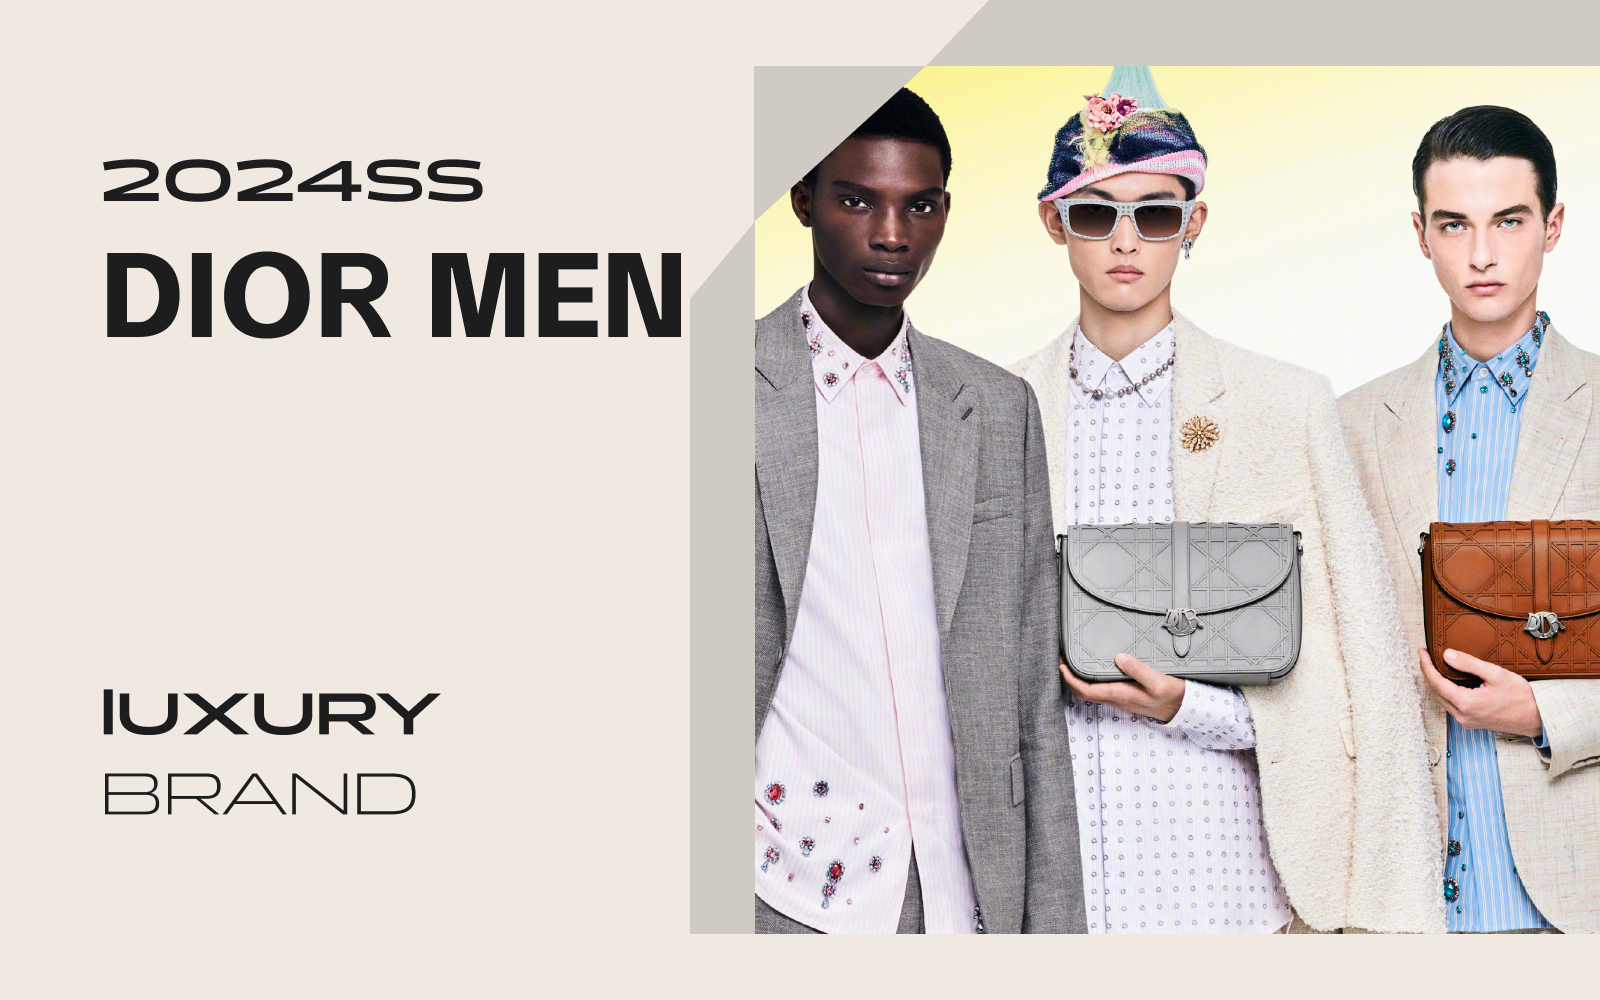 Elegant Leisure -- The Analysis of DIOR MEN The Luxury Menswear Brand